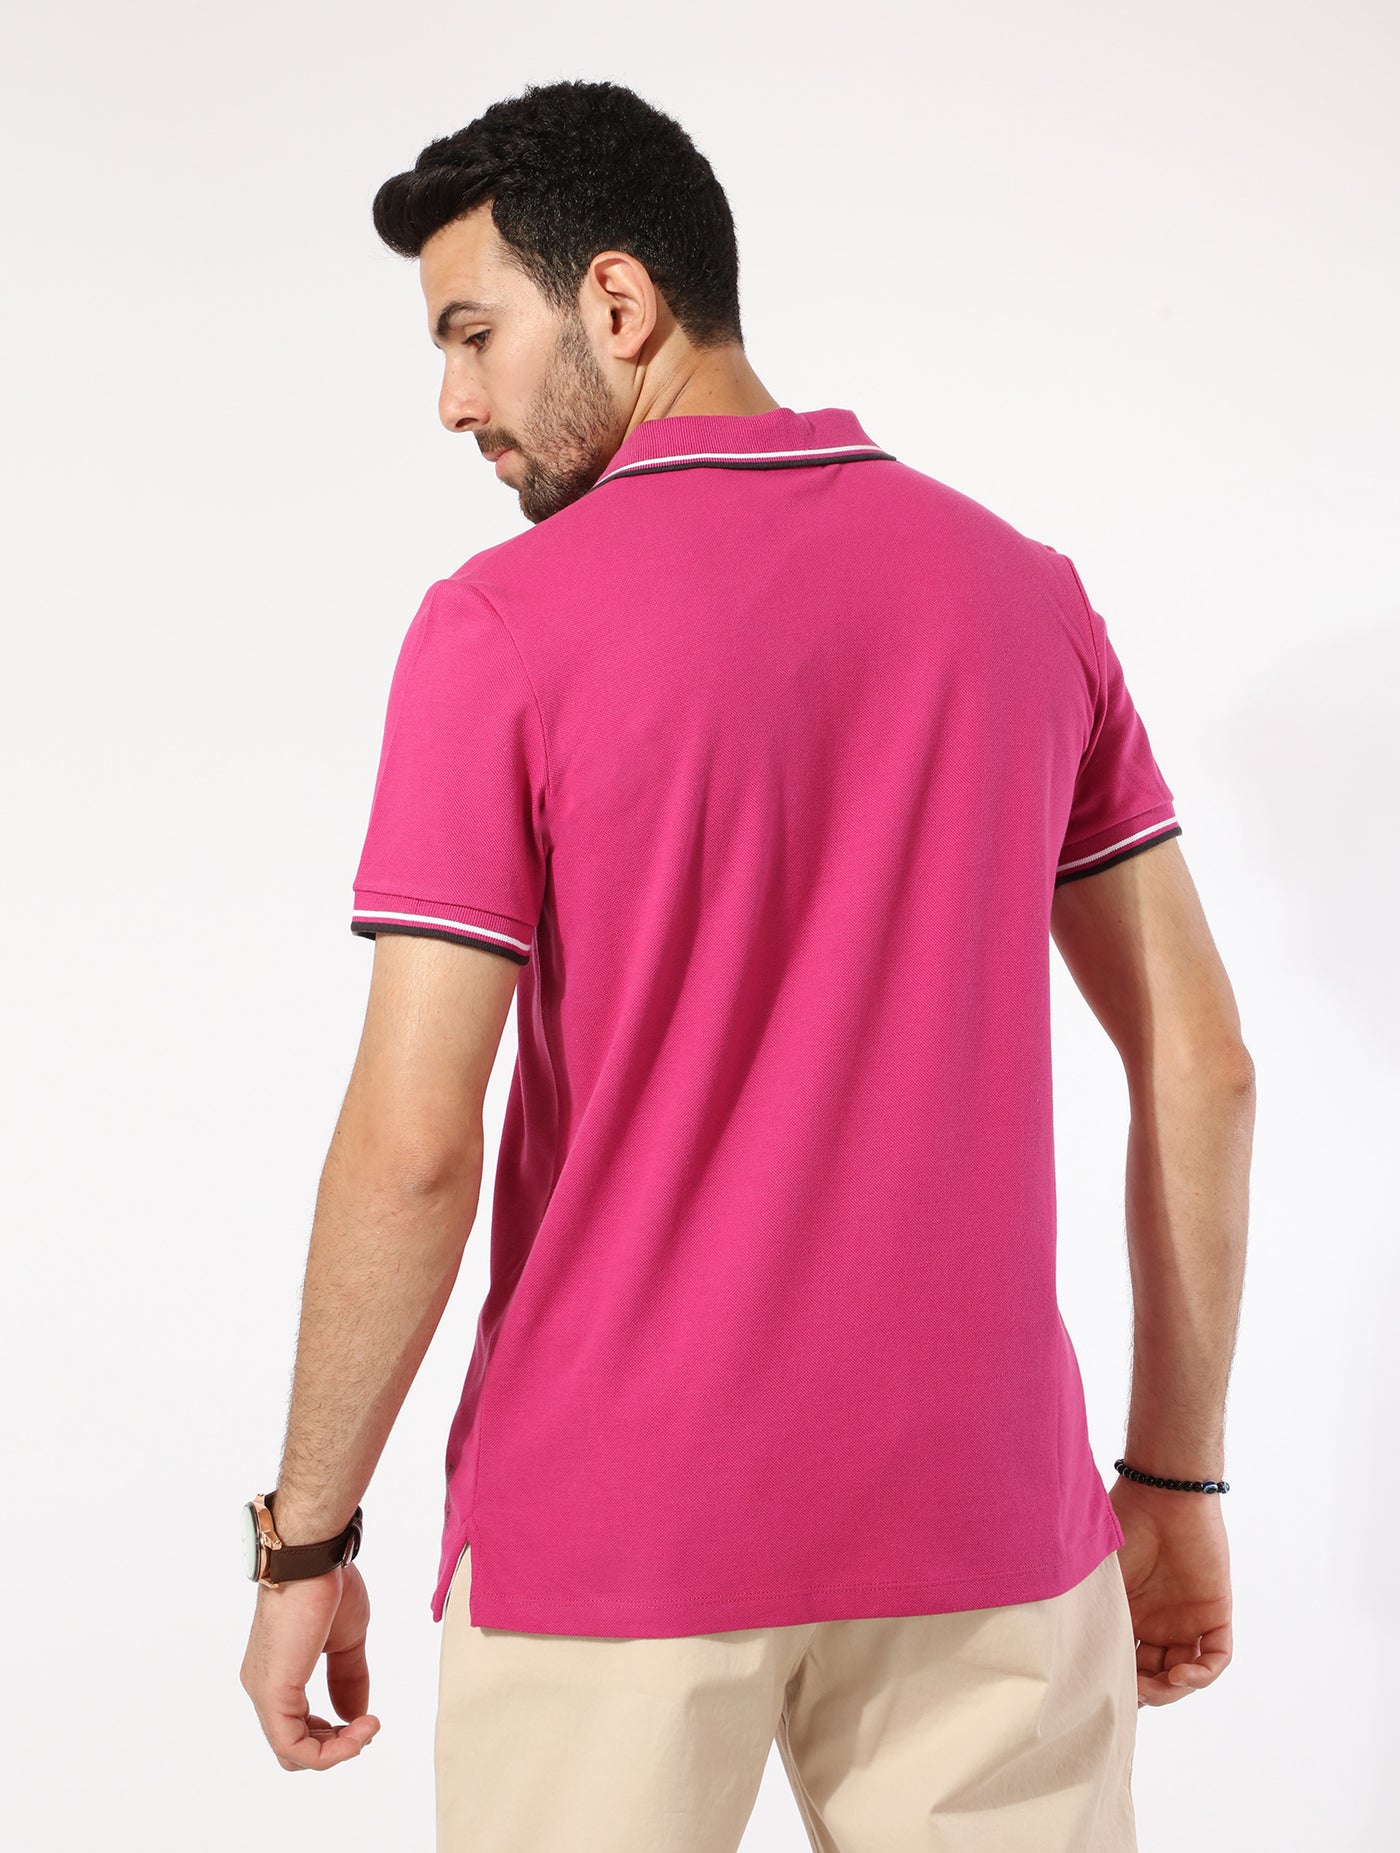 Polo Shirt - Half Sleeves - Contrast Stripes